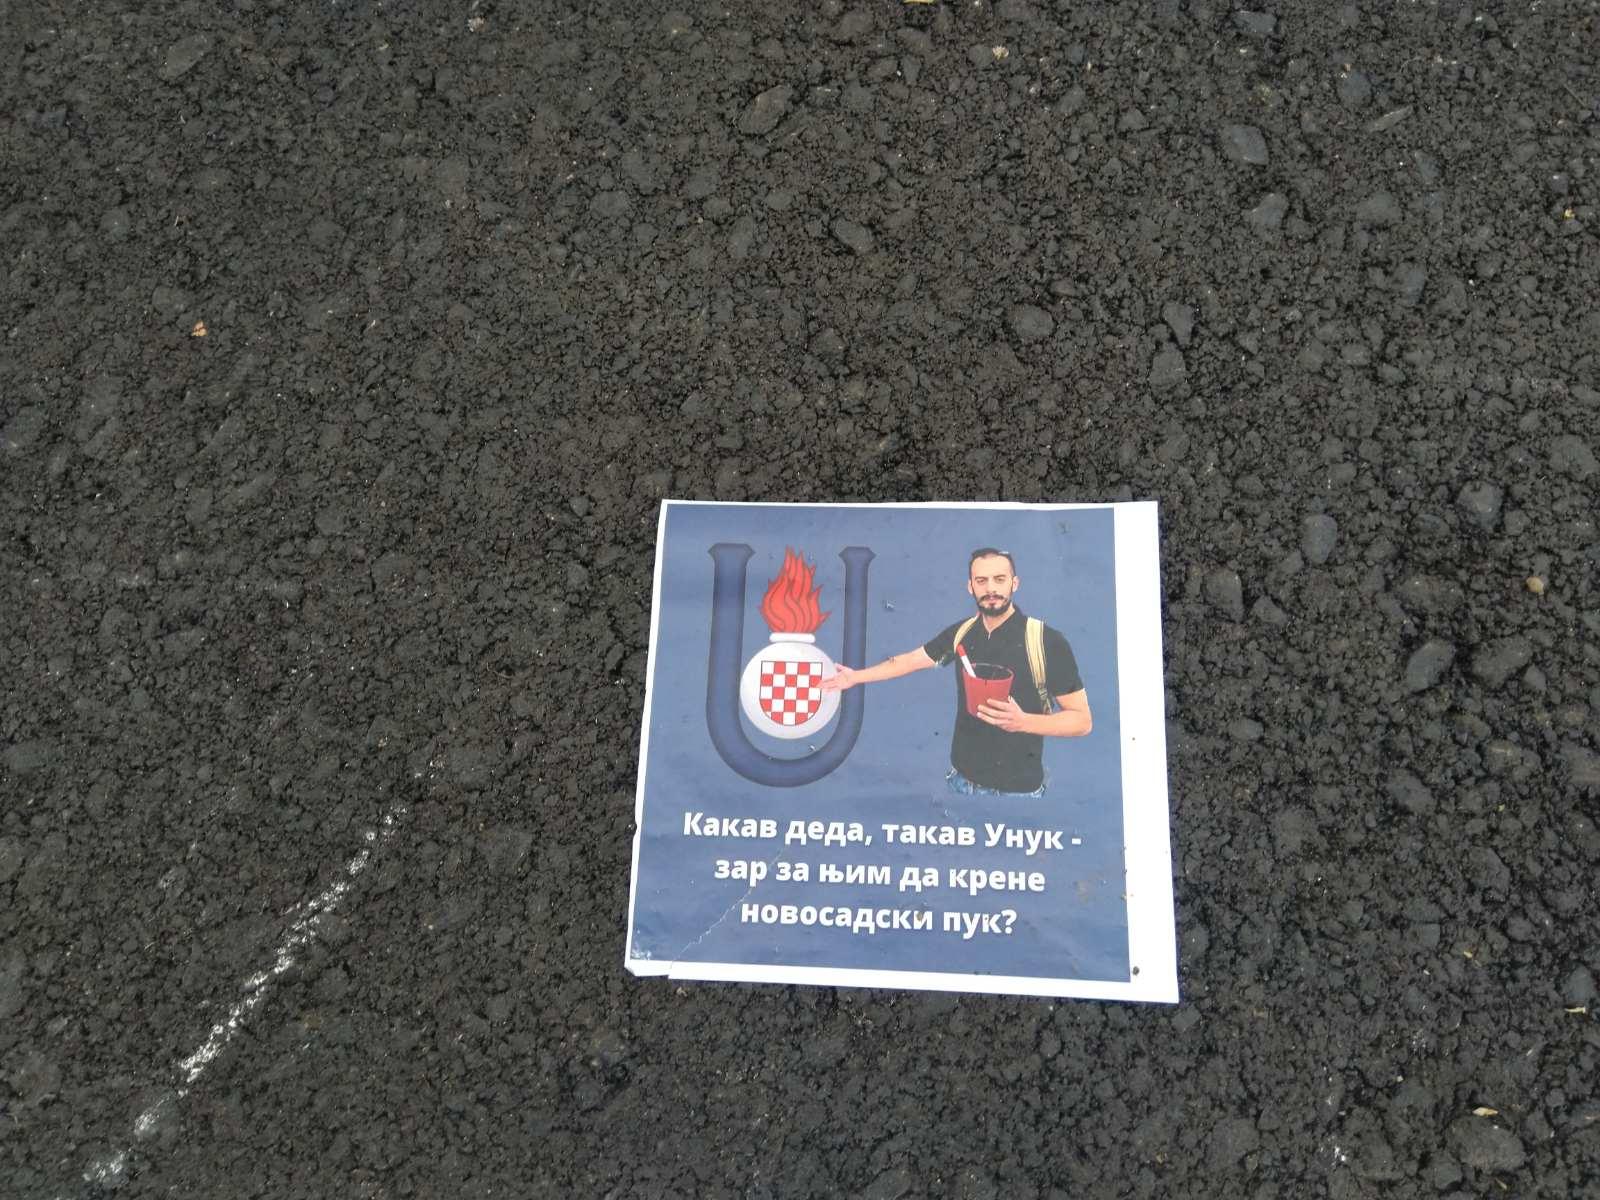 Transparent na asfaltu - Avaz